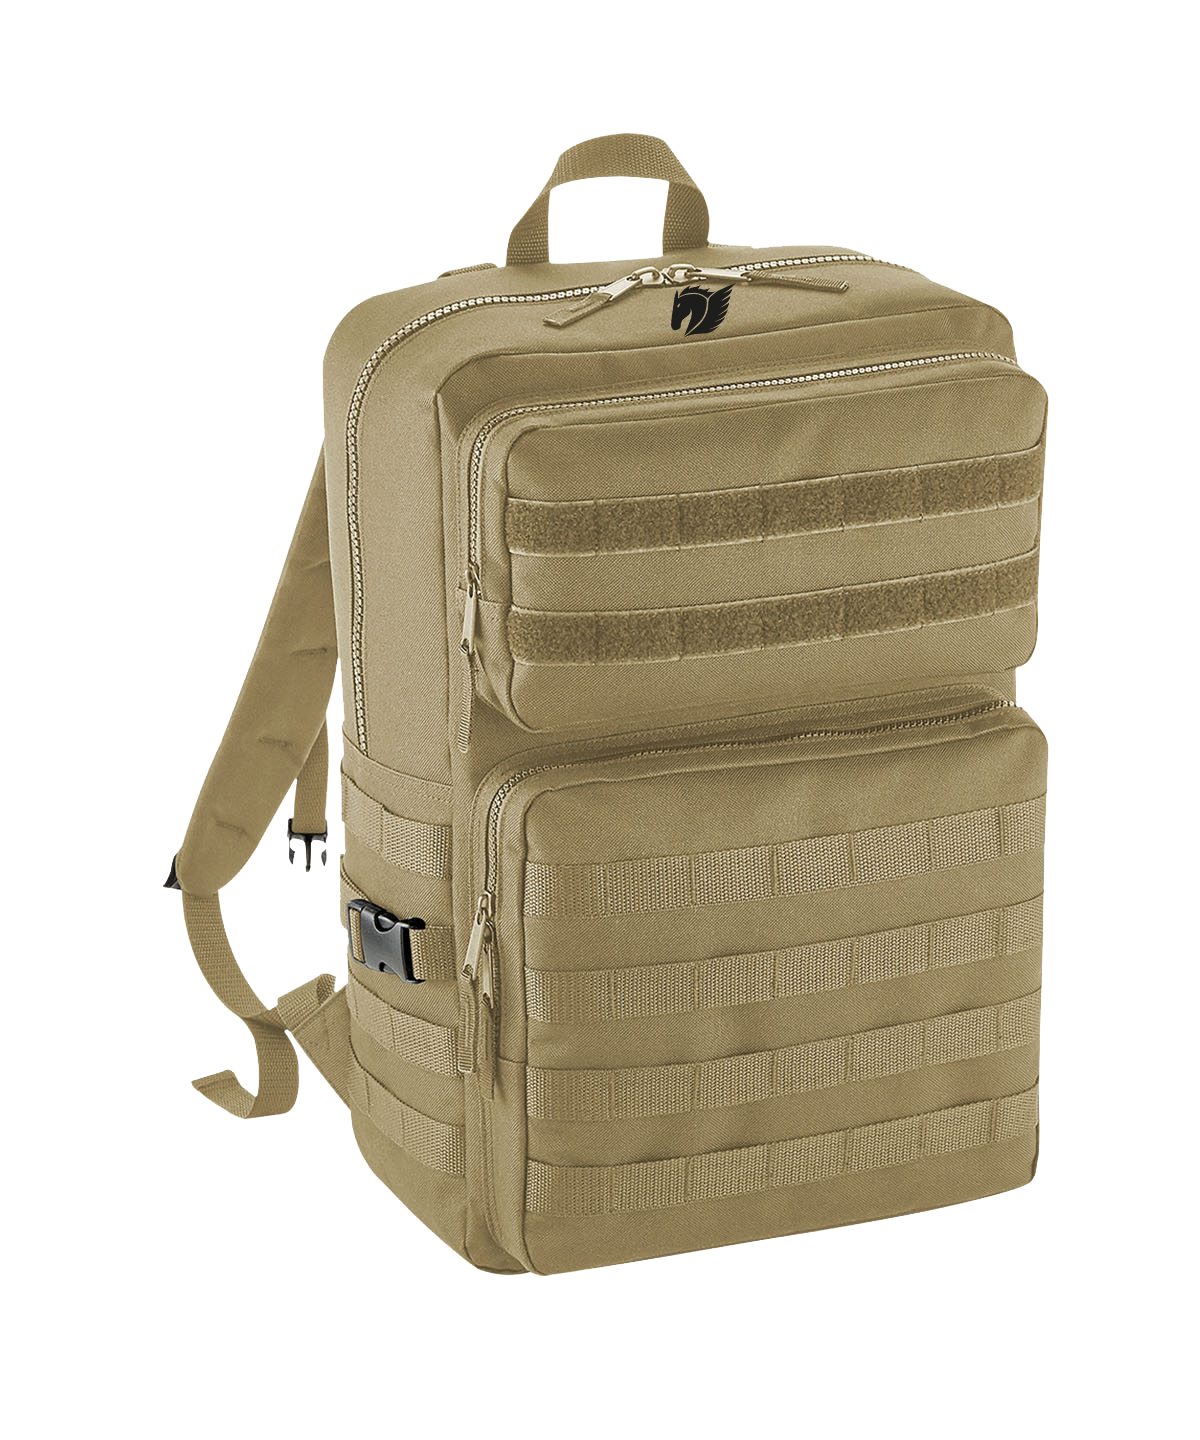 Tactical Backpack - Desert Sand